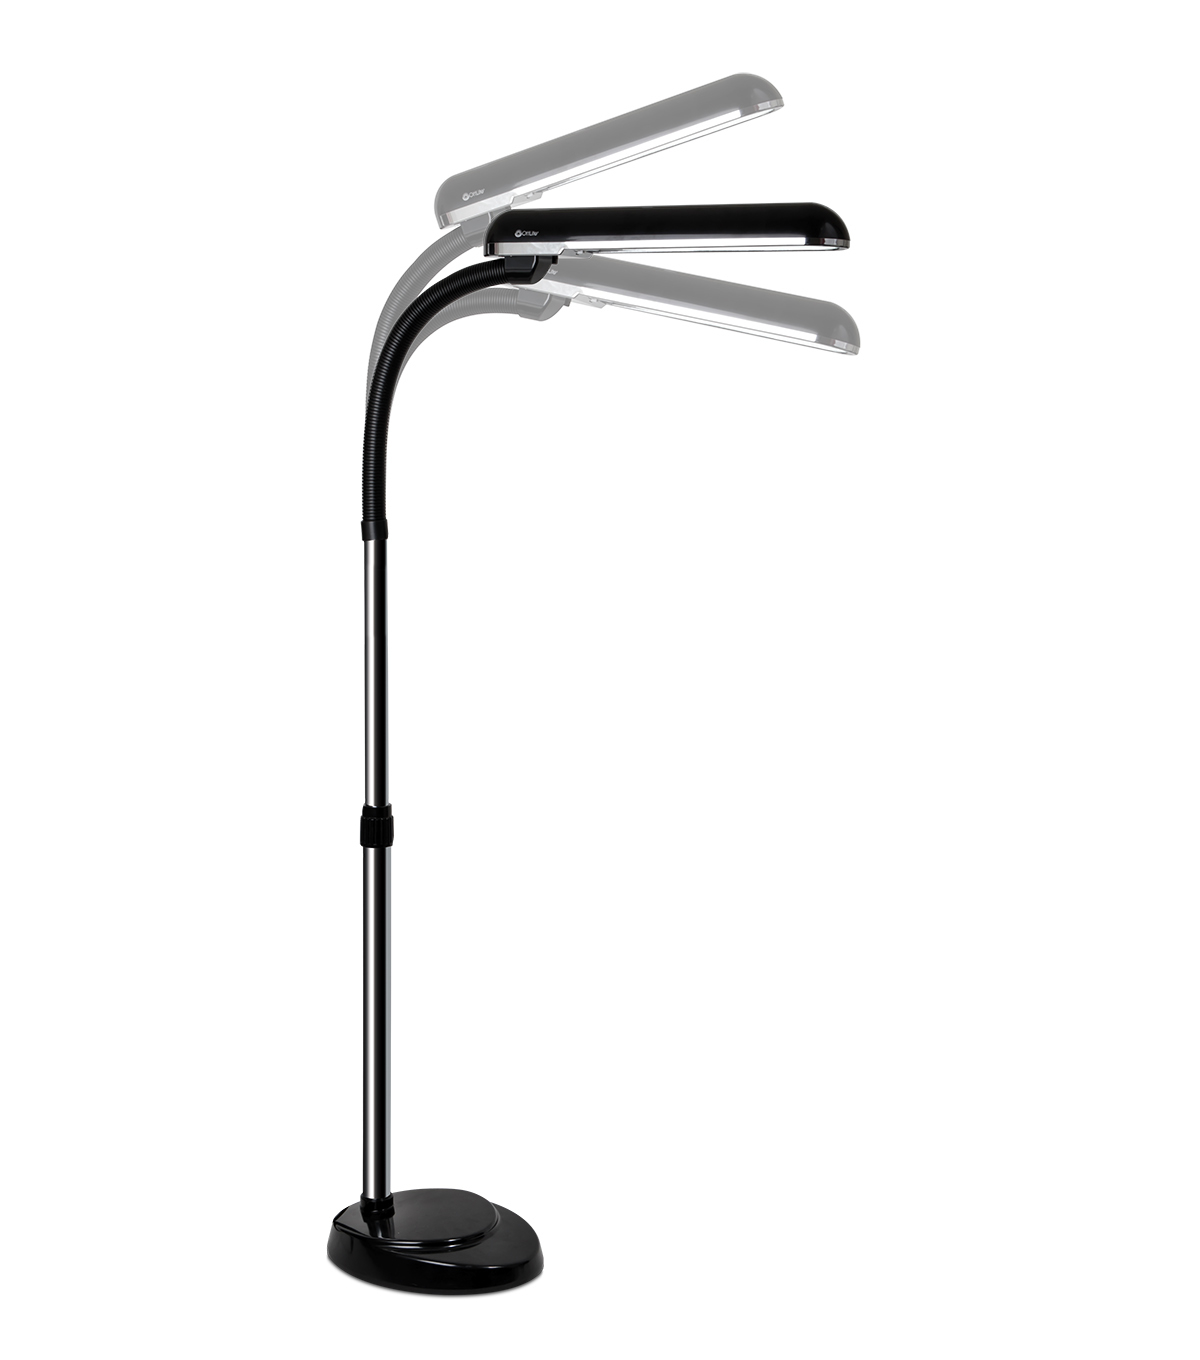 Ottlite 24w High Design Pro Floor Lamp pertaining to measurements 1200 X 1360